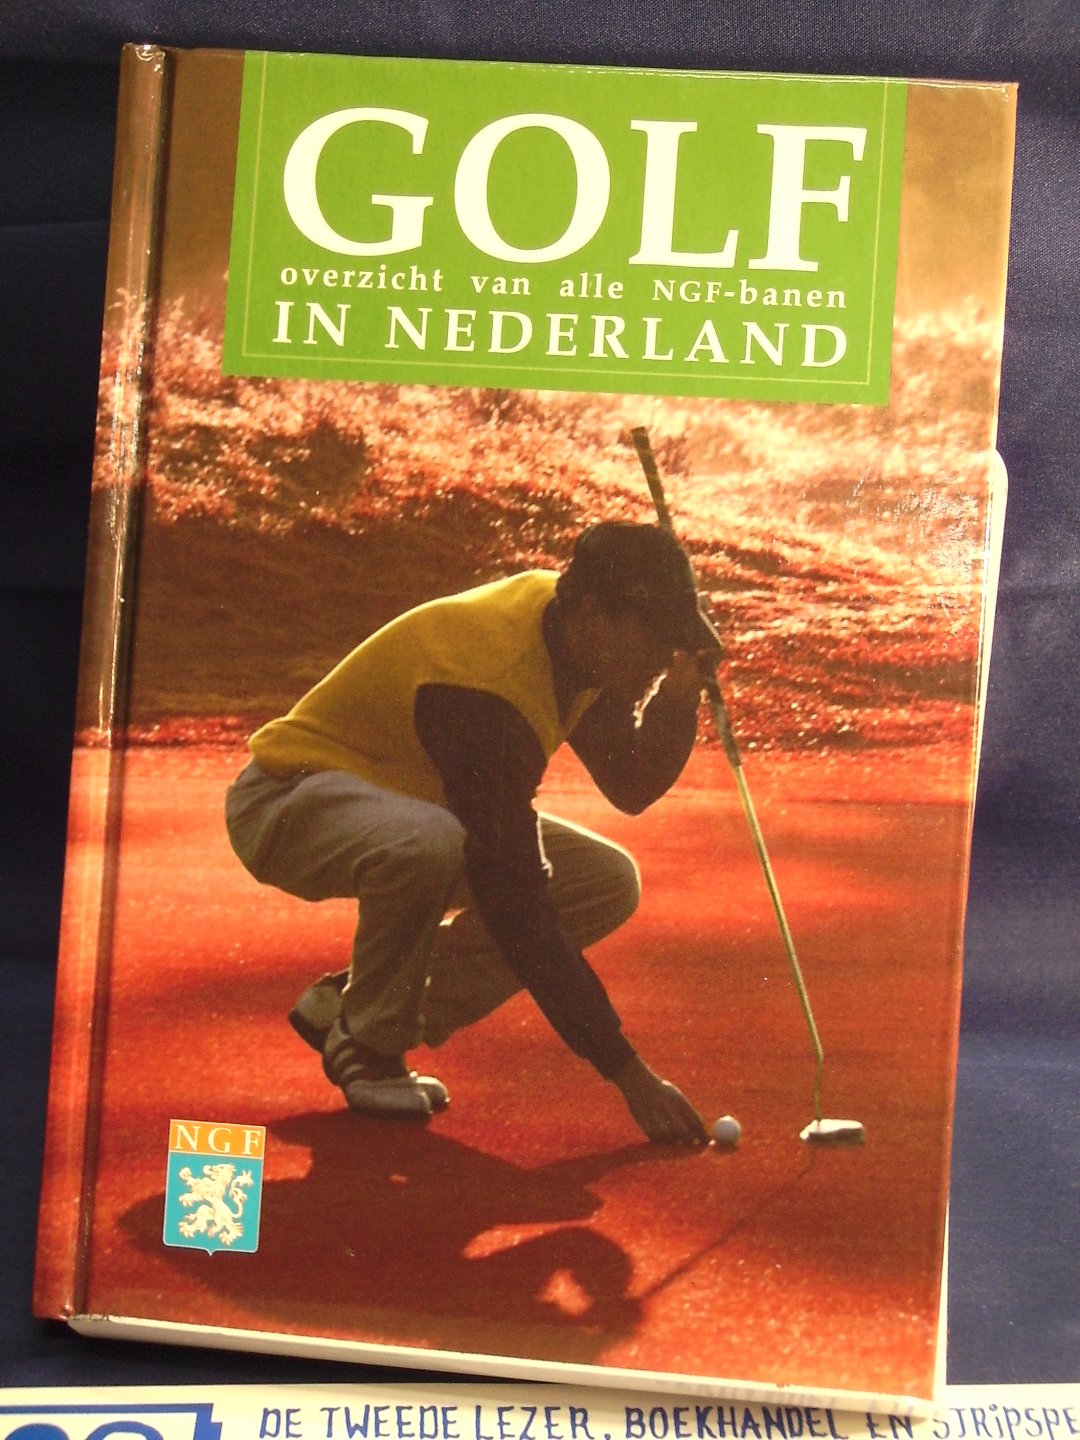  - Golf in Nederland / overzicht van alle NGF-banen in Nederland